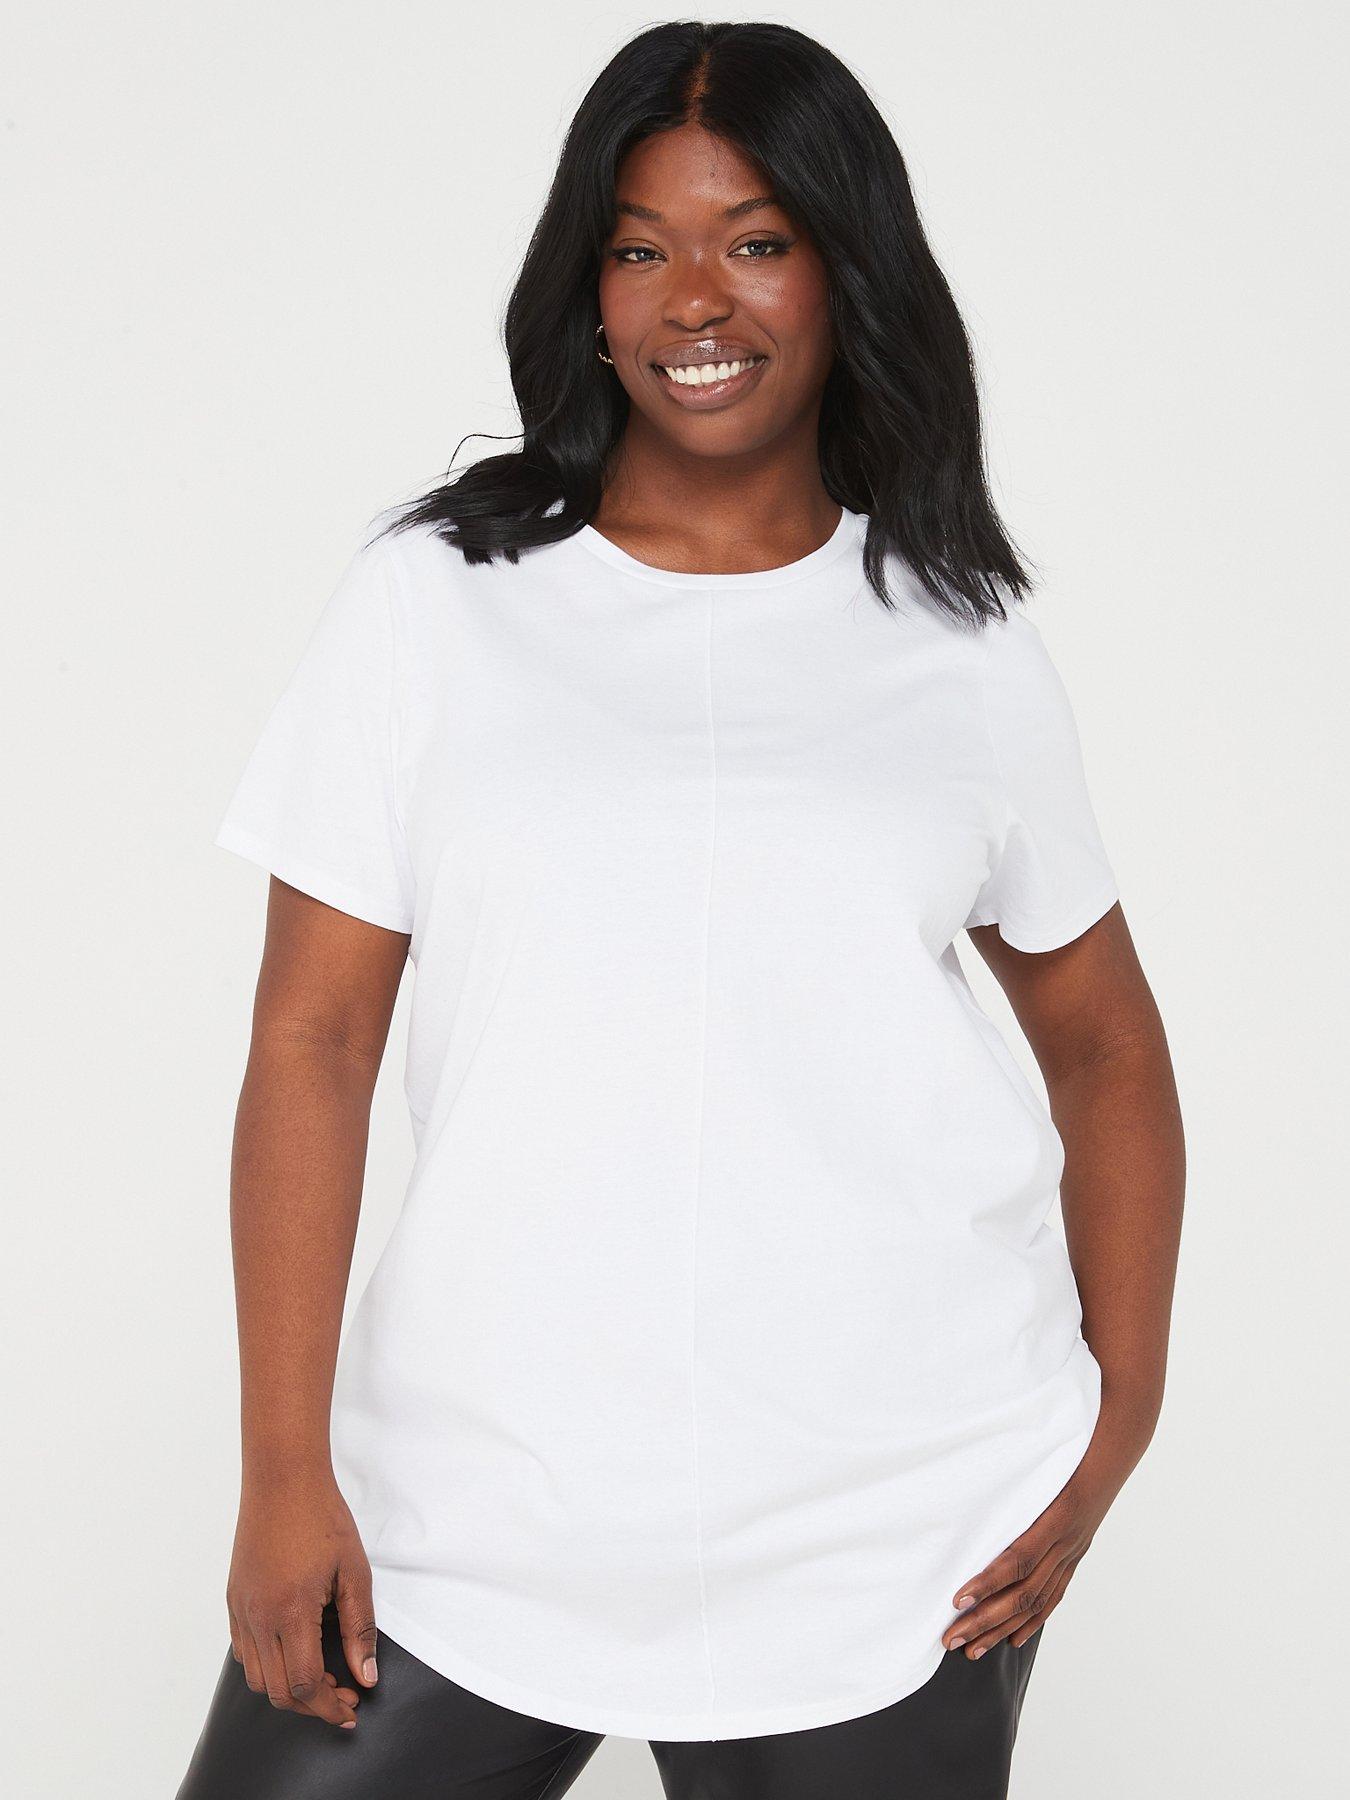 twifer shirts for womens women's women's plus size big chest t-shirt shirt  short sleevet-shirt shirt top